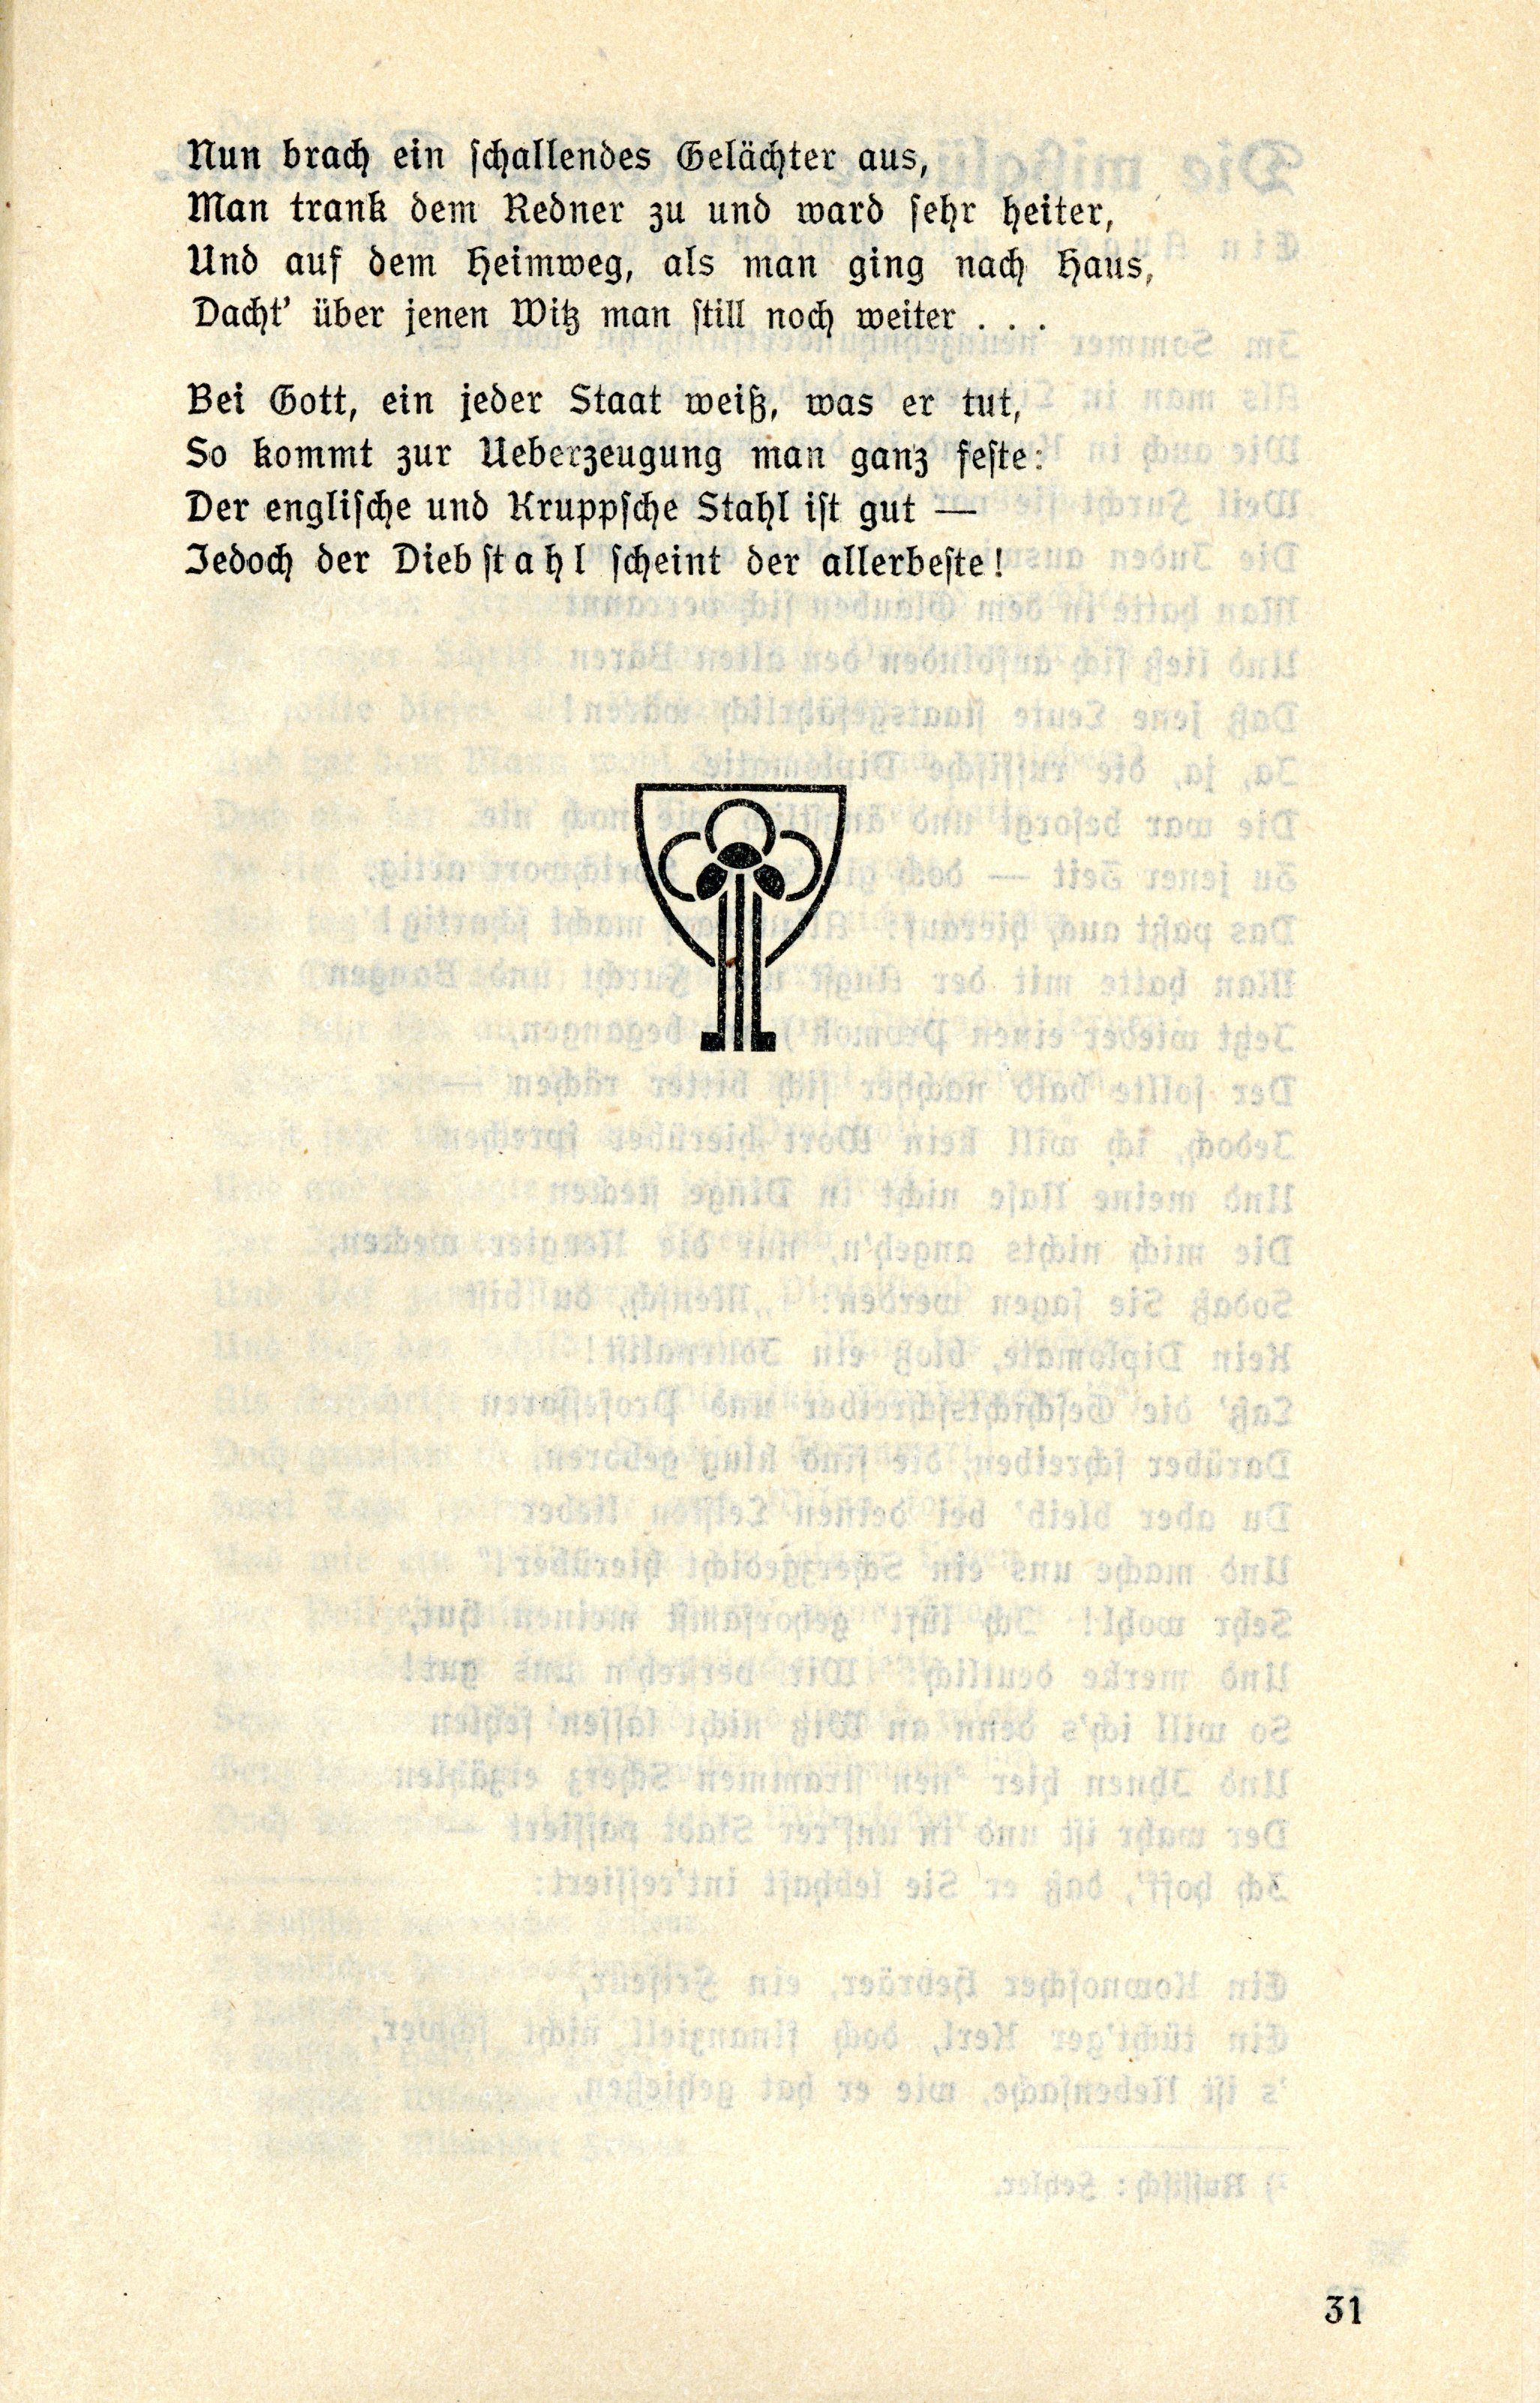 Der Balte im Maulkorb (1917) | 32. (31) Основной текст